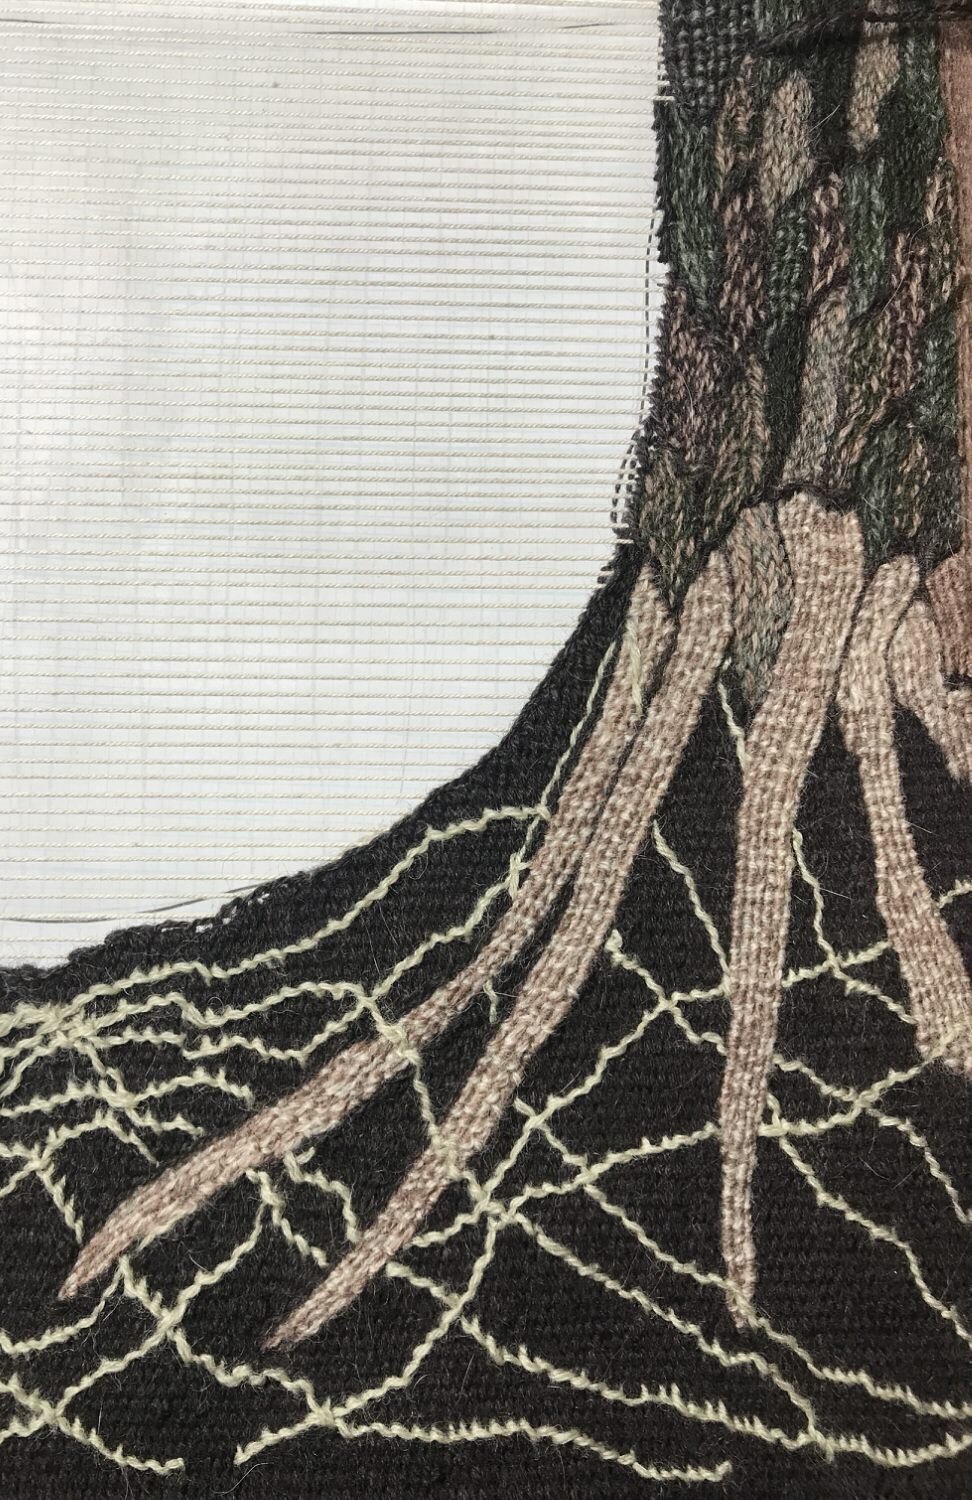 Tapestry Weaving in Progress — My Tapestry Journeys